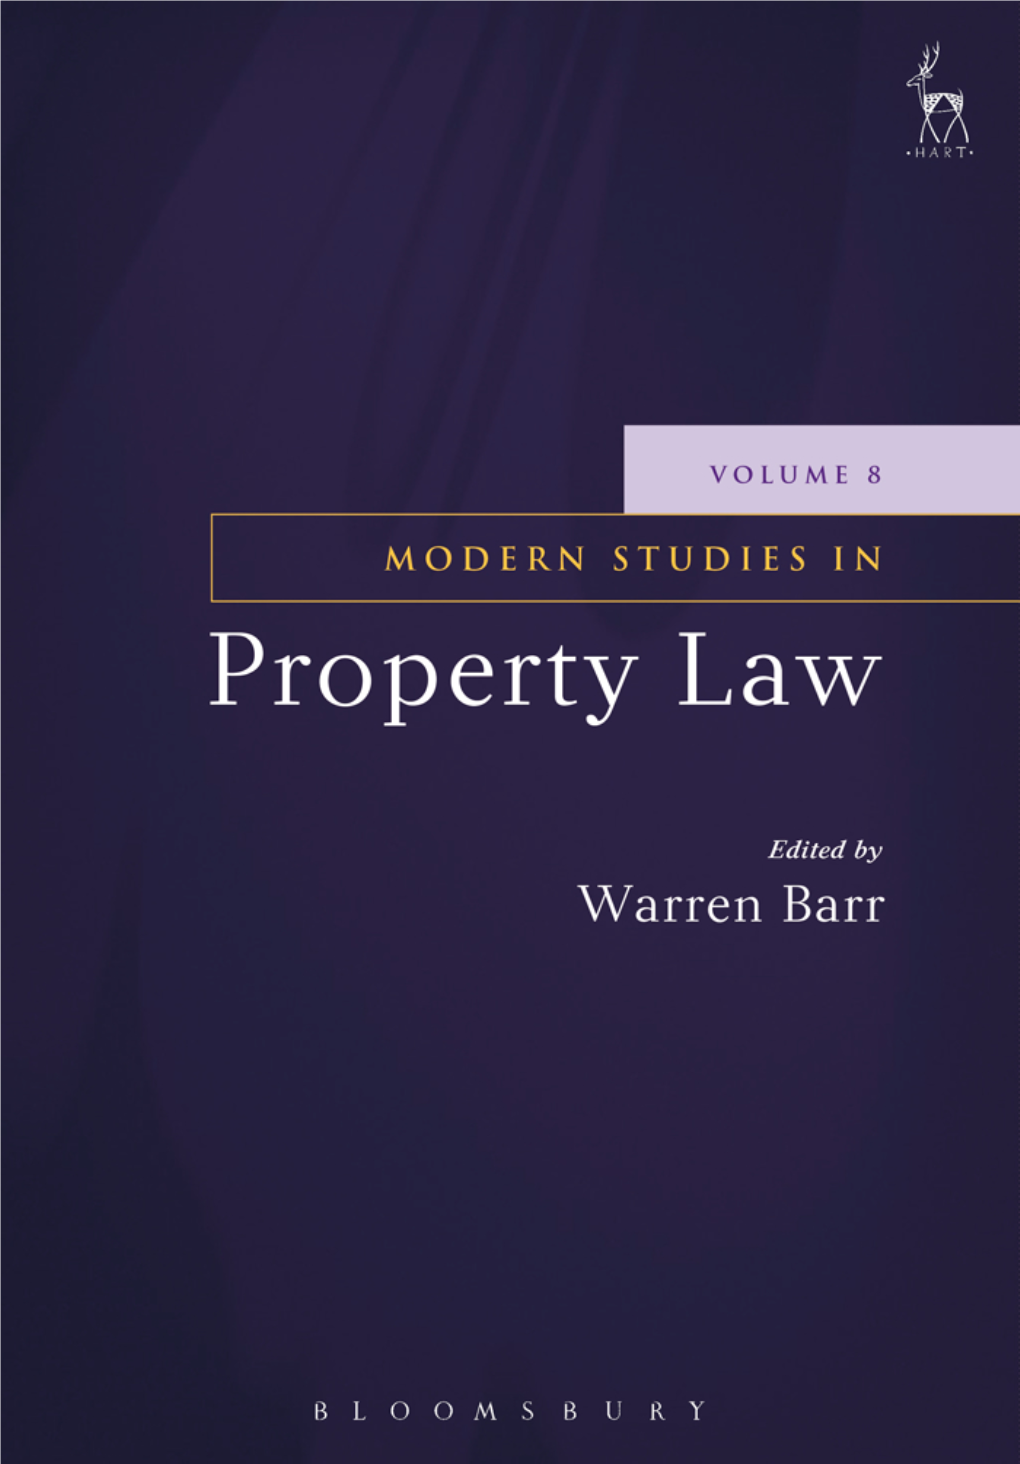 Modern Studies in Property Law: Volume 8